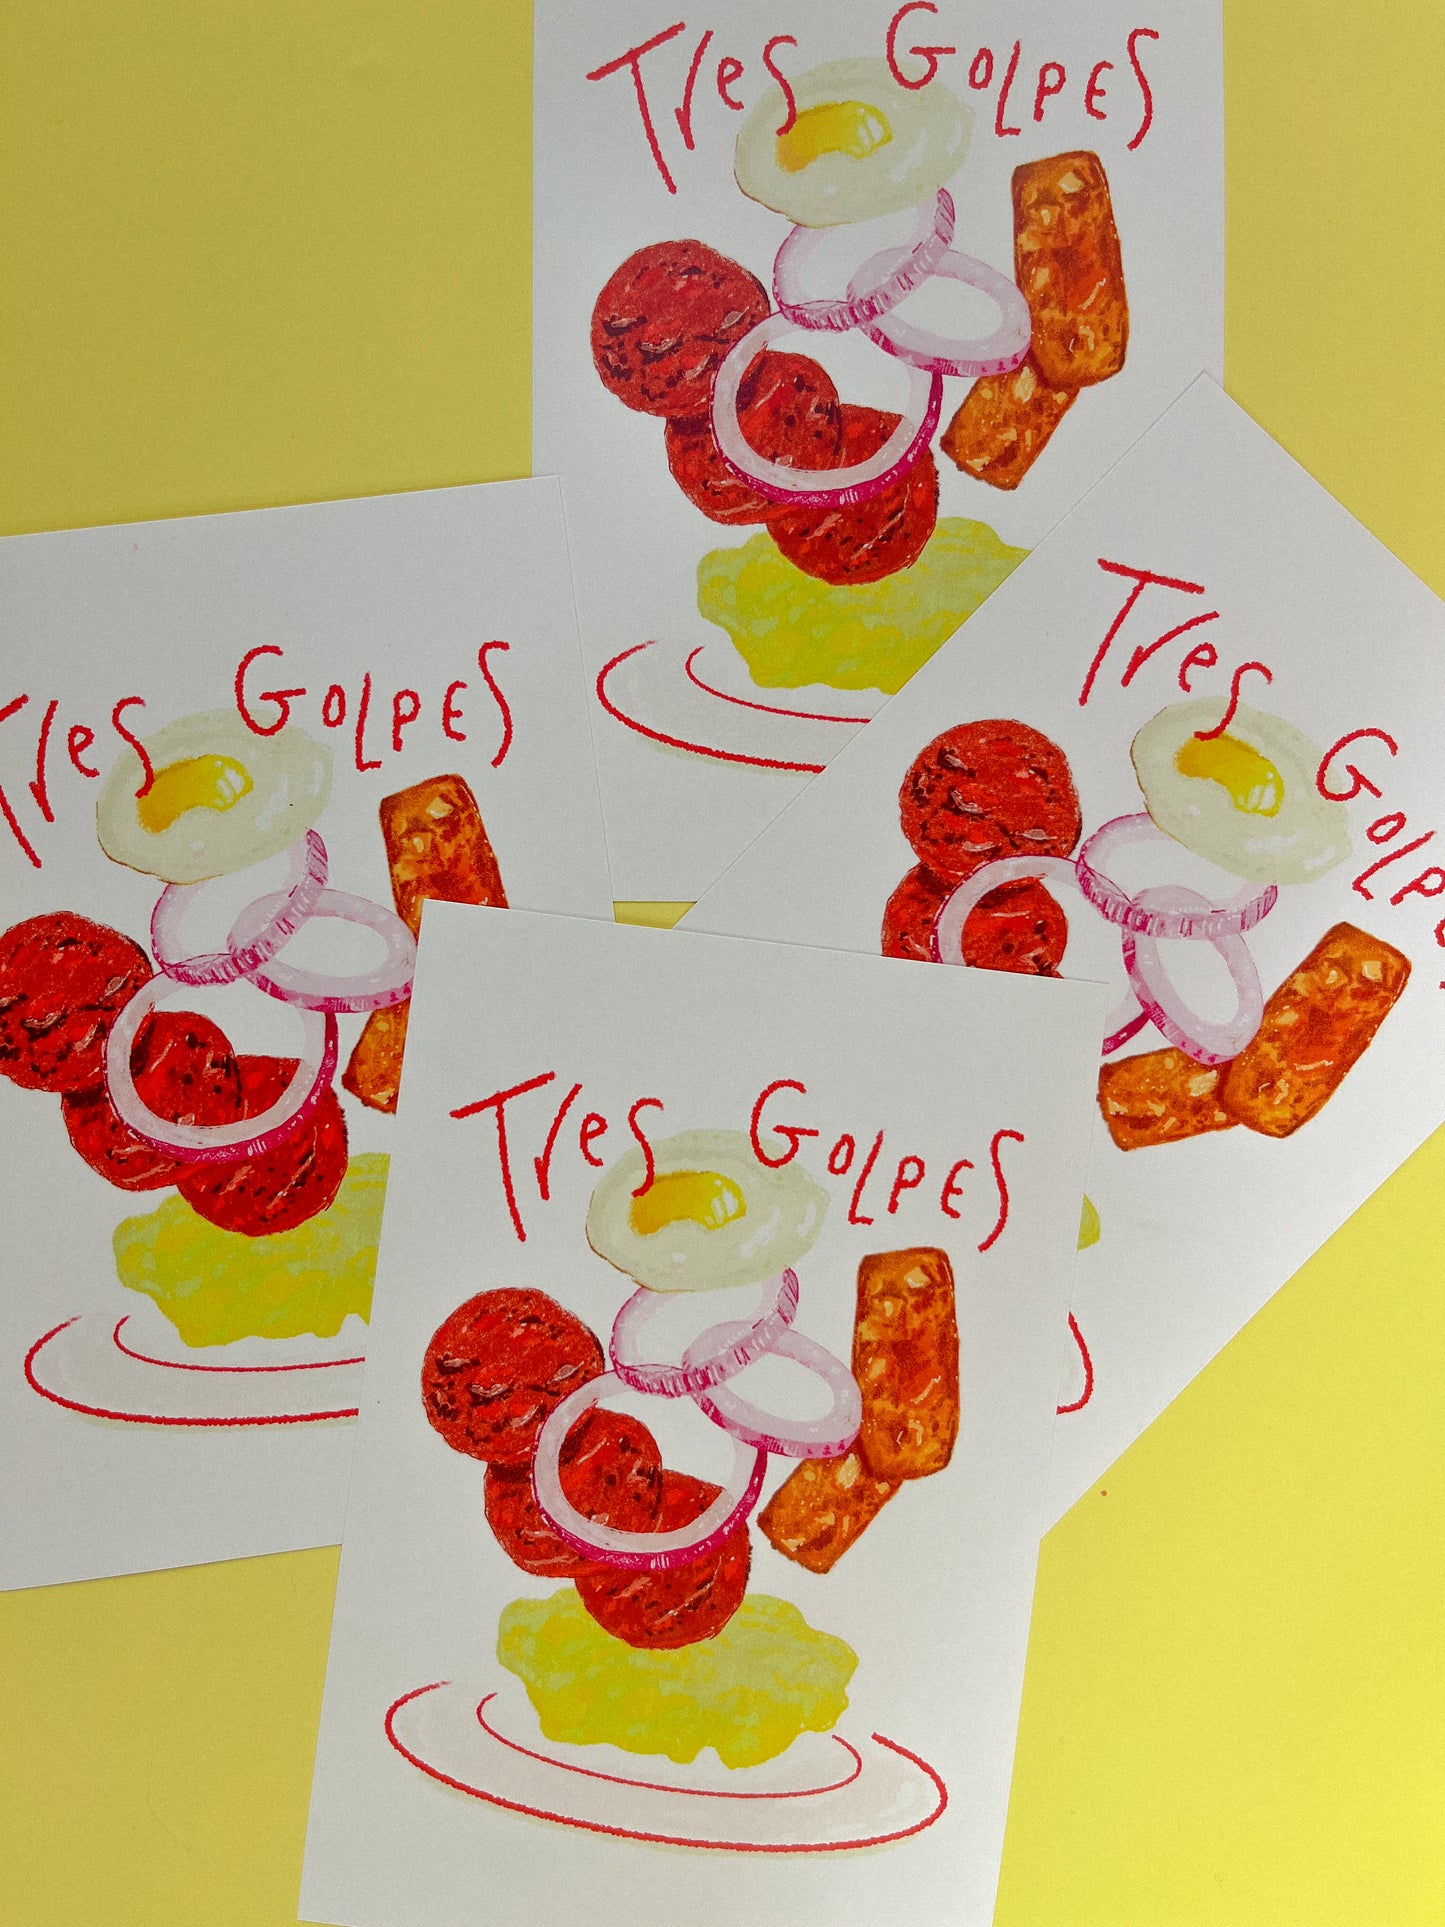 Tres Golpes! A Dominican Breakfast Postcard